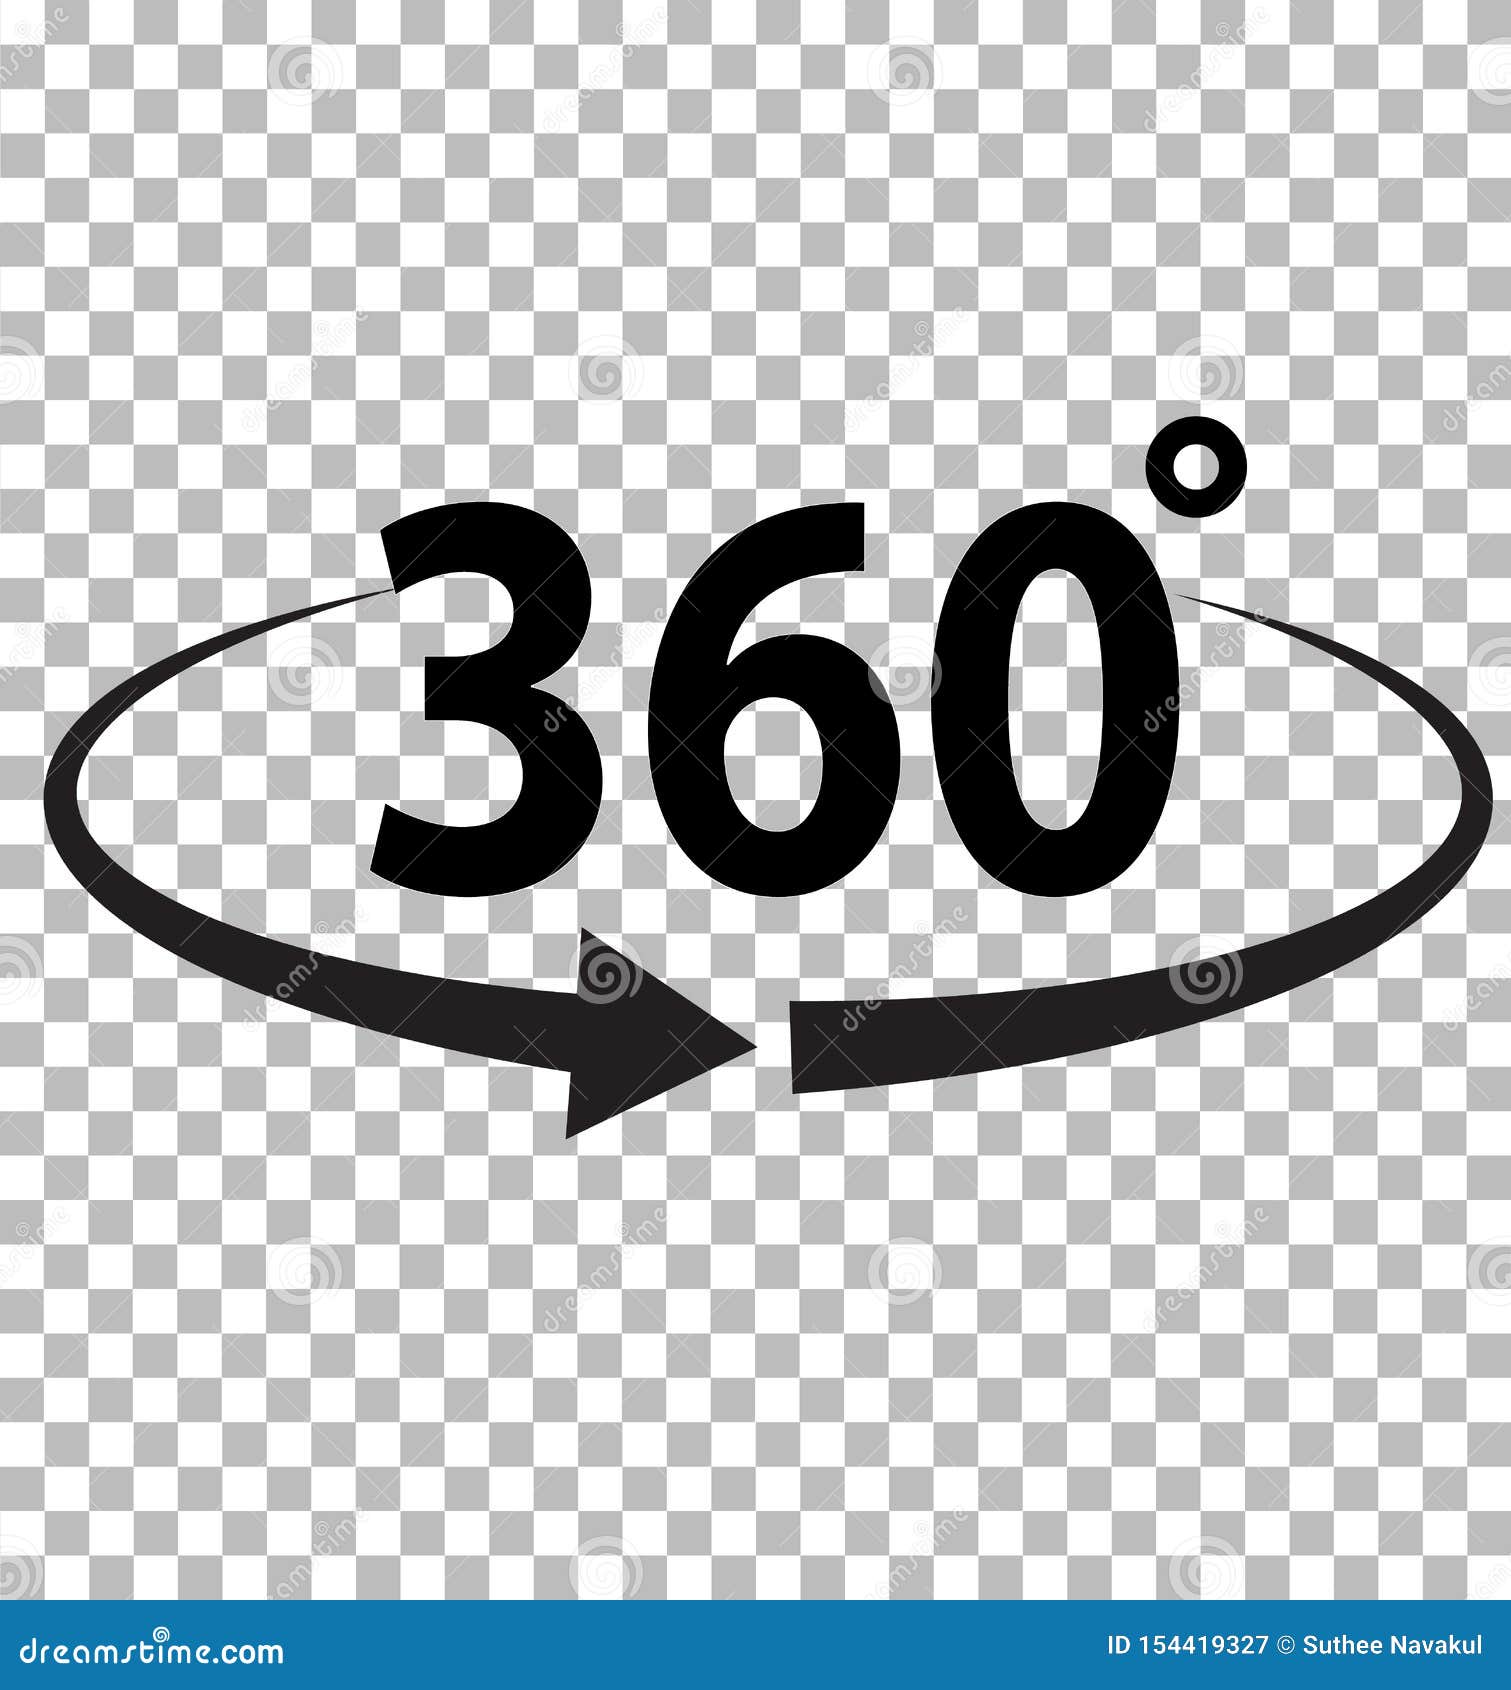 angle-360-degree-icon-full-view-sign-cartoon-vector-cartoondealer